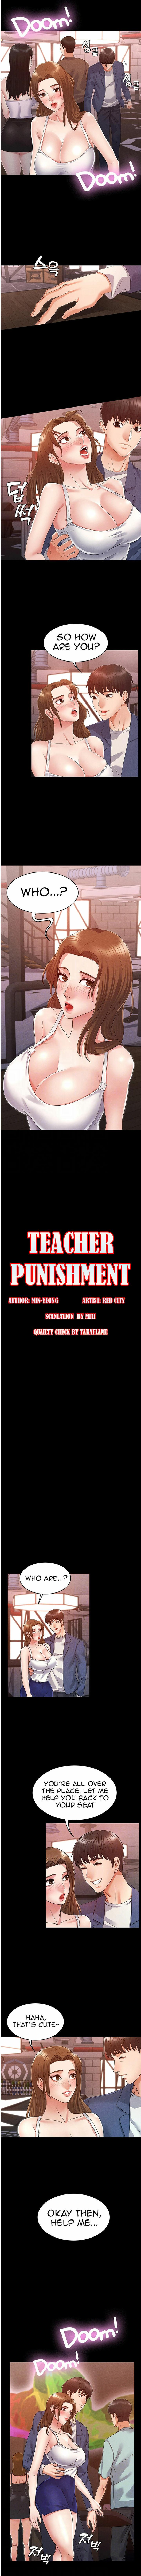 TEACHER PUNISHMENT Ch.1-8 11